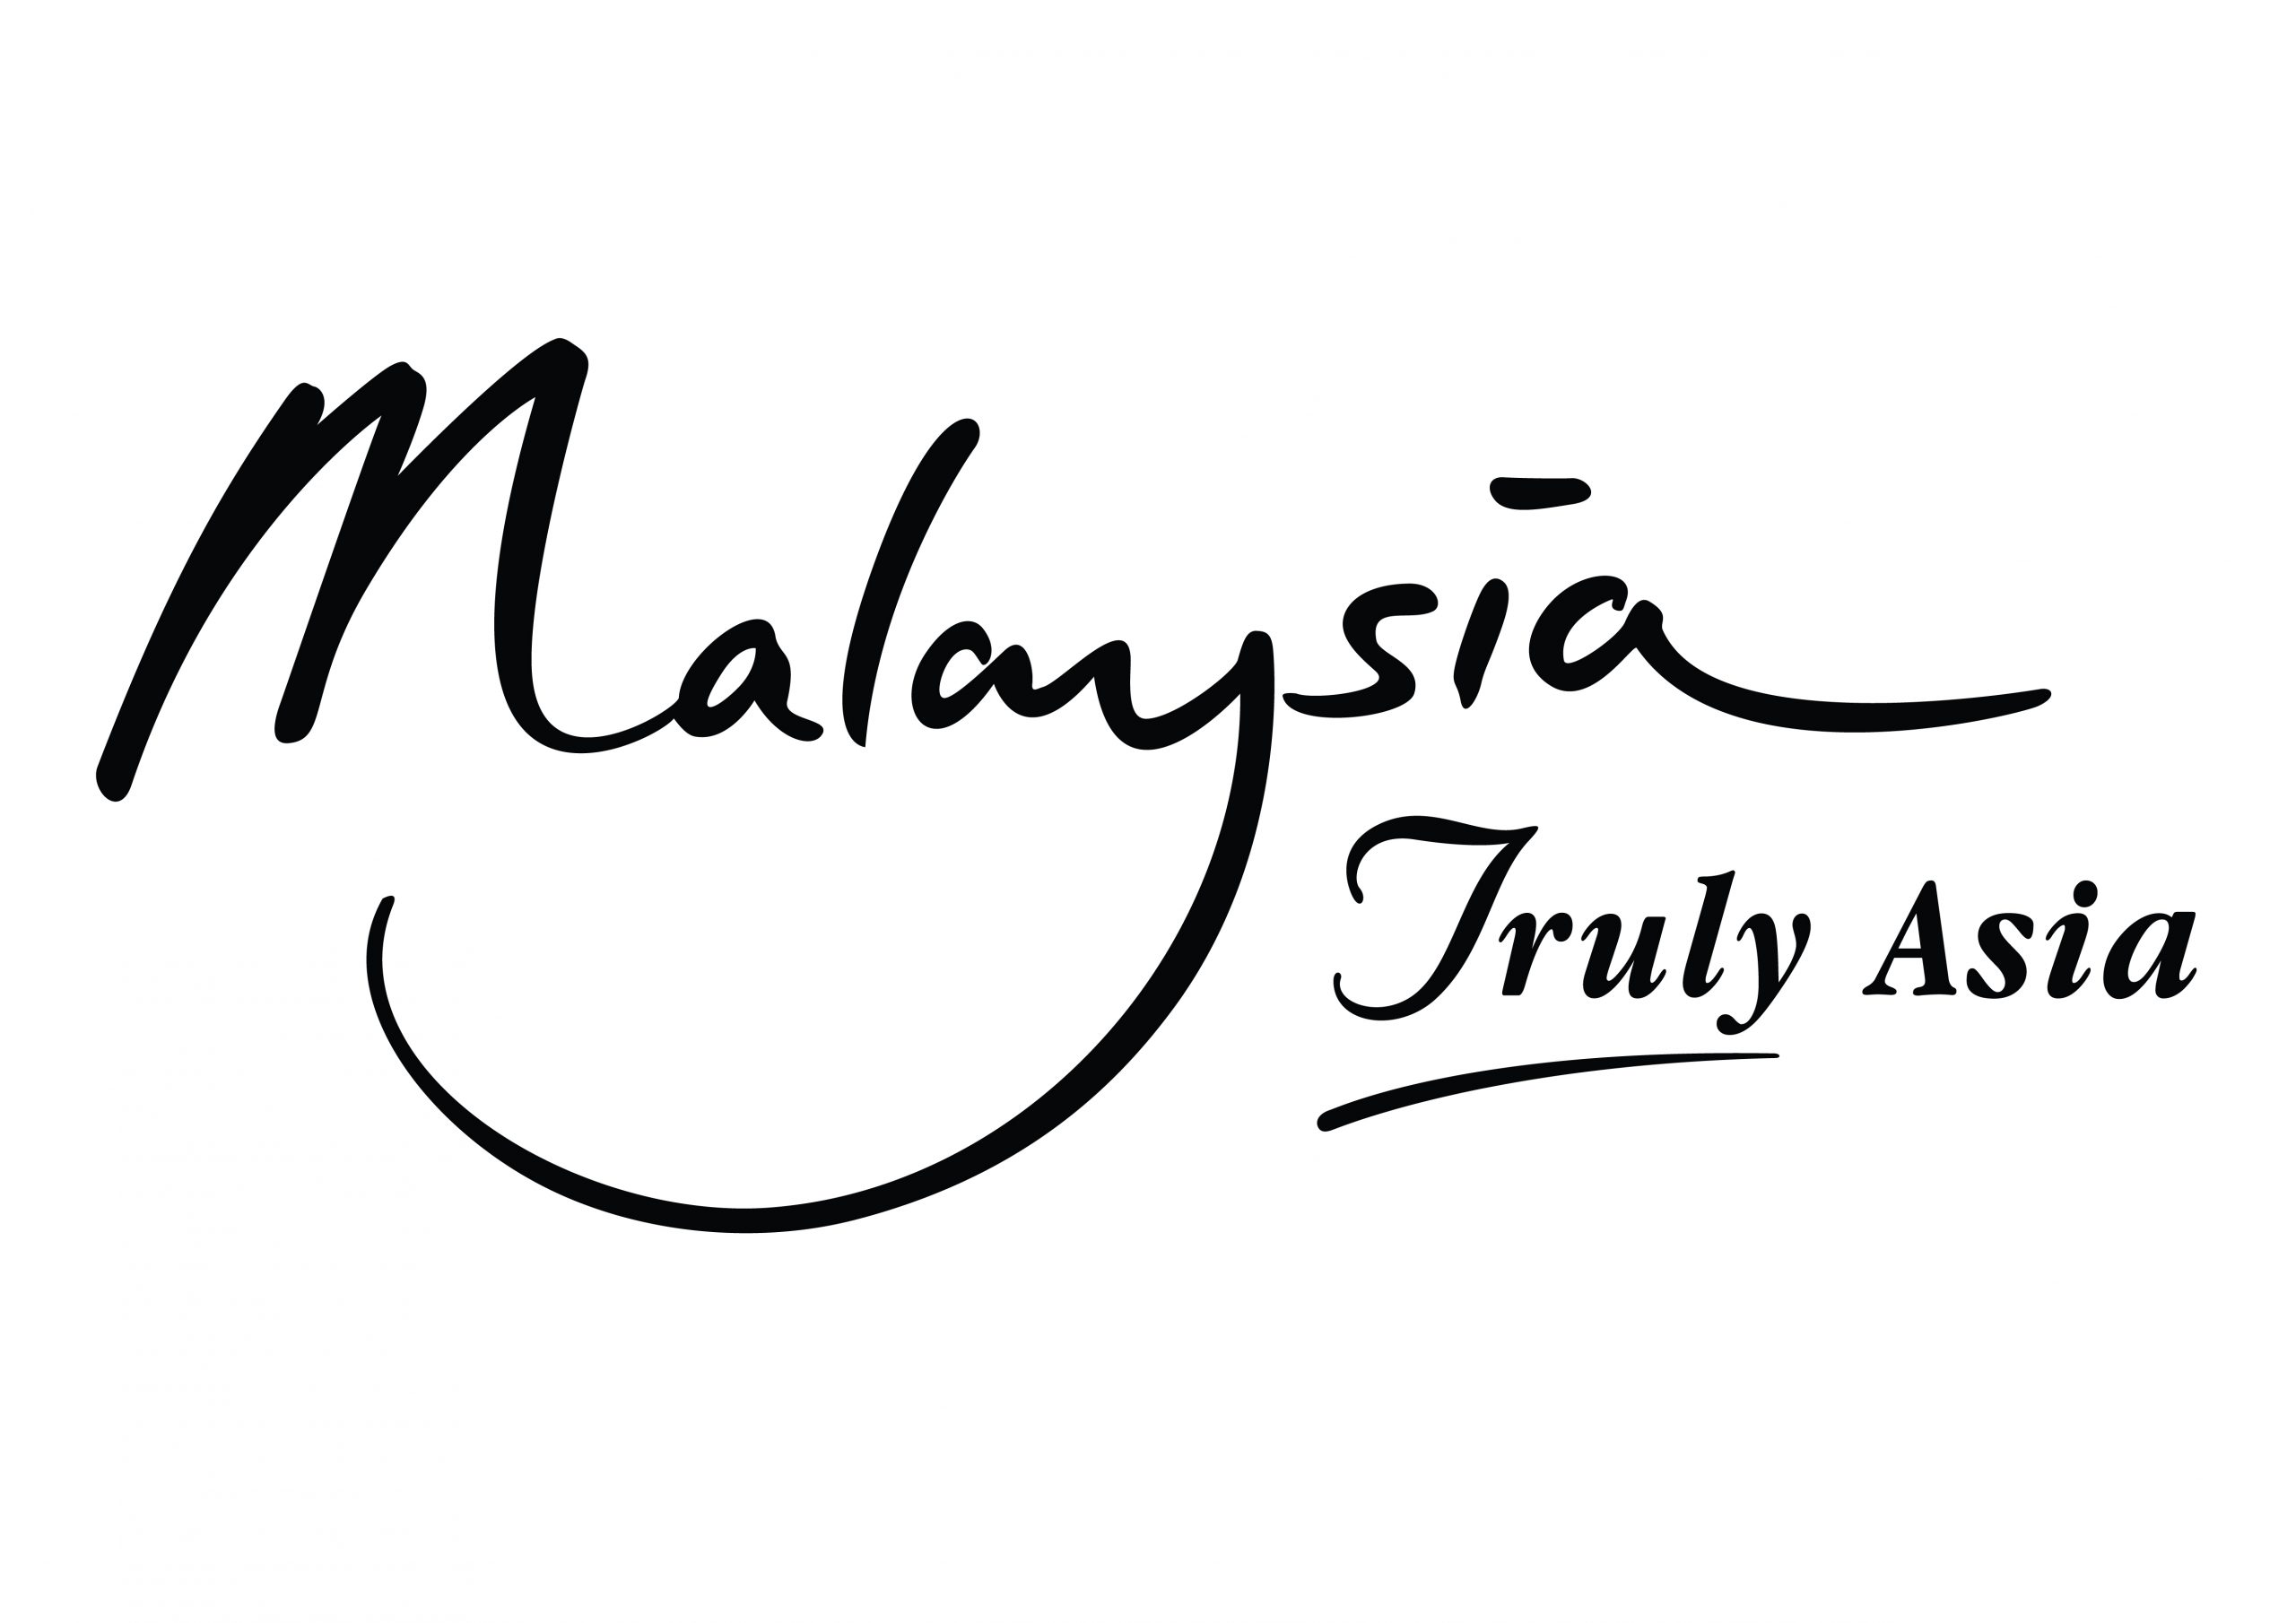 Sponsored by Tourism Malaysia